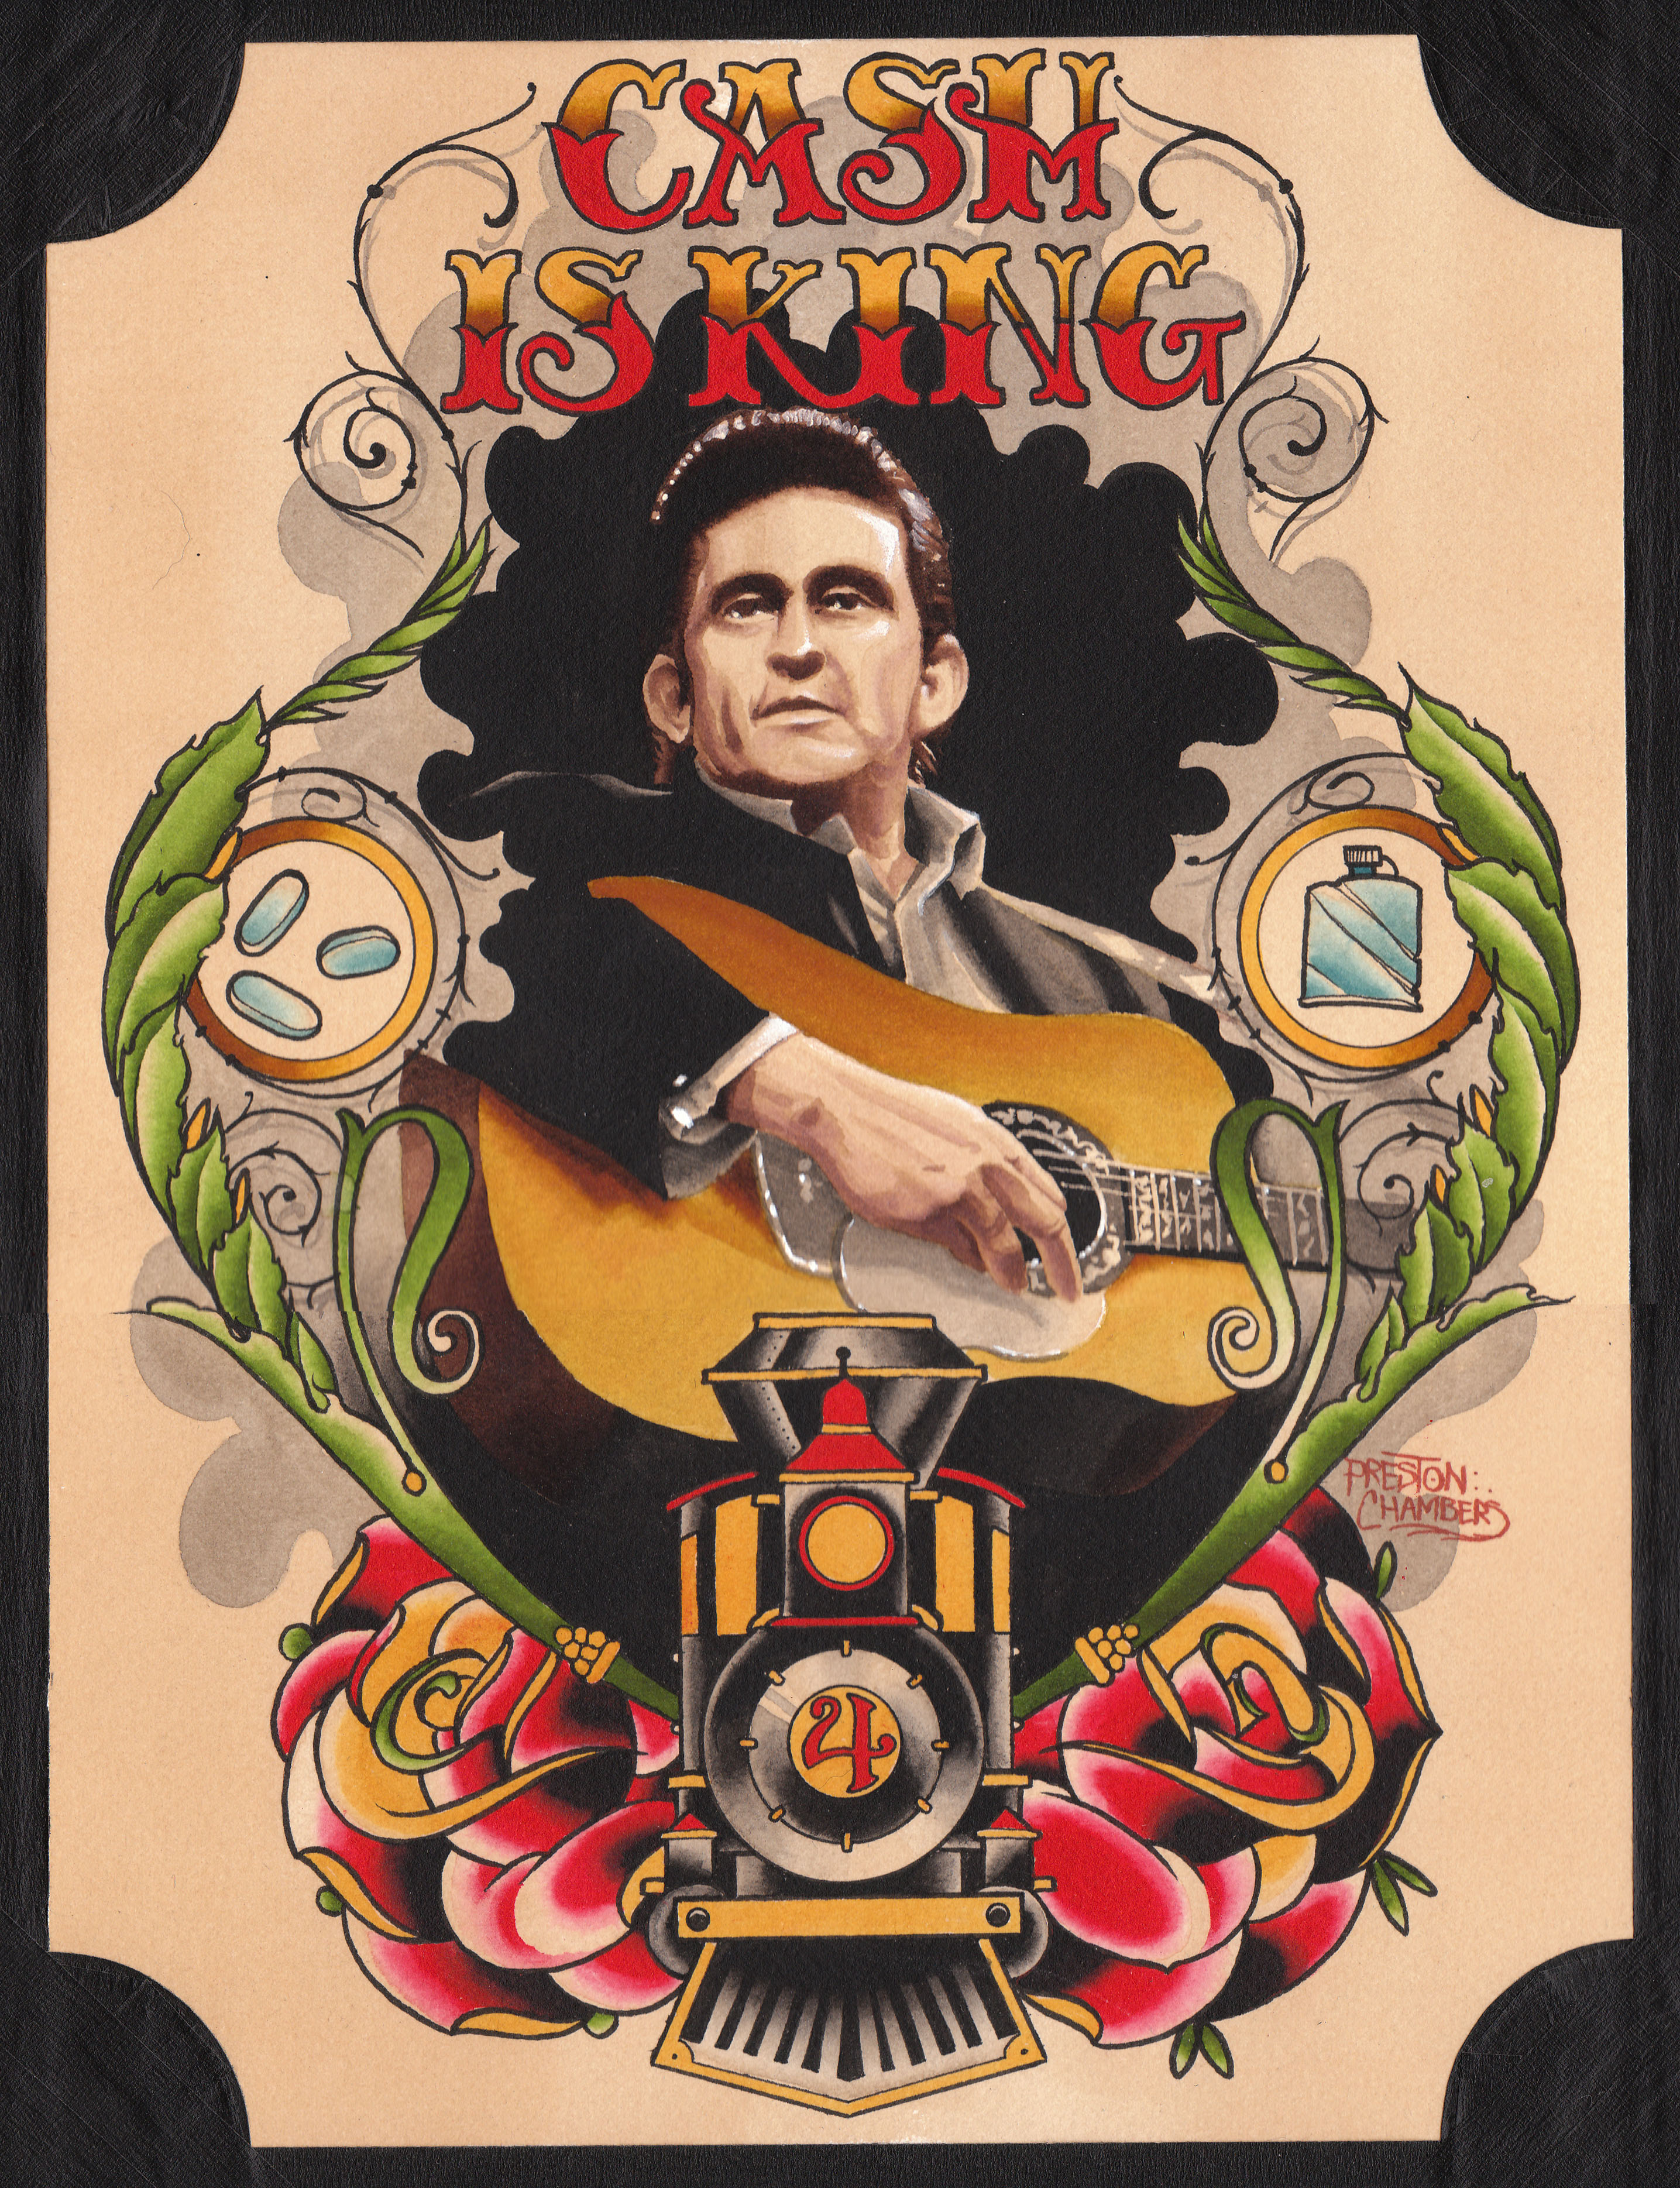 Johnny Cash Wallpaper , HD Wallpaper & Backgrounds